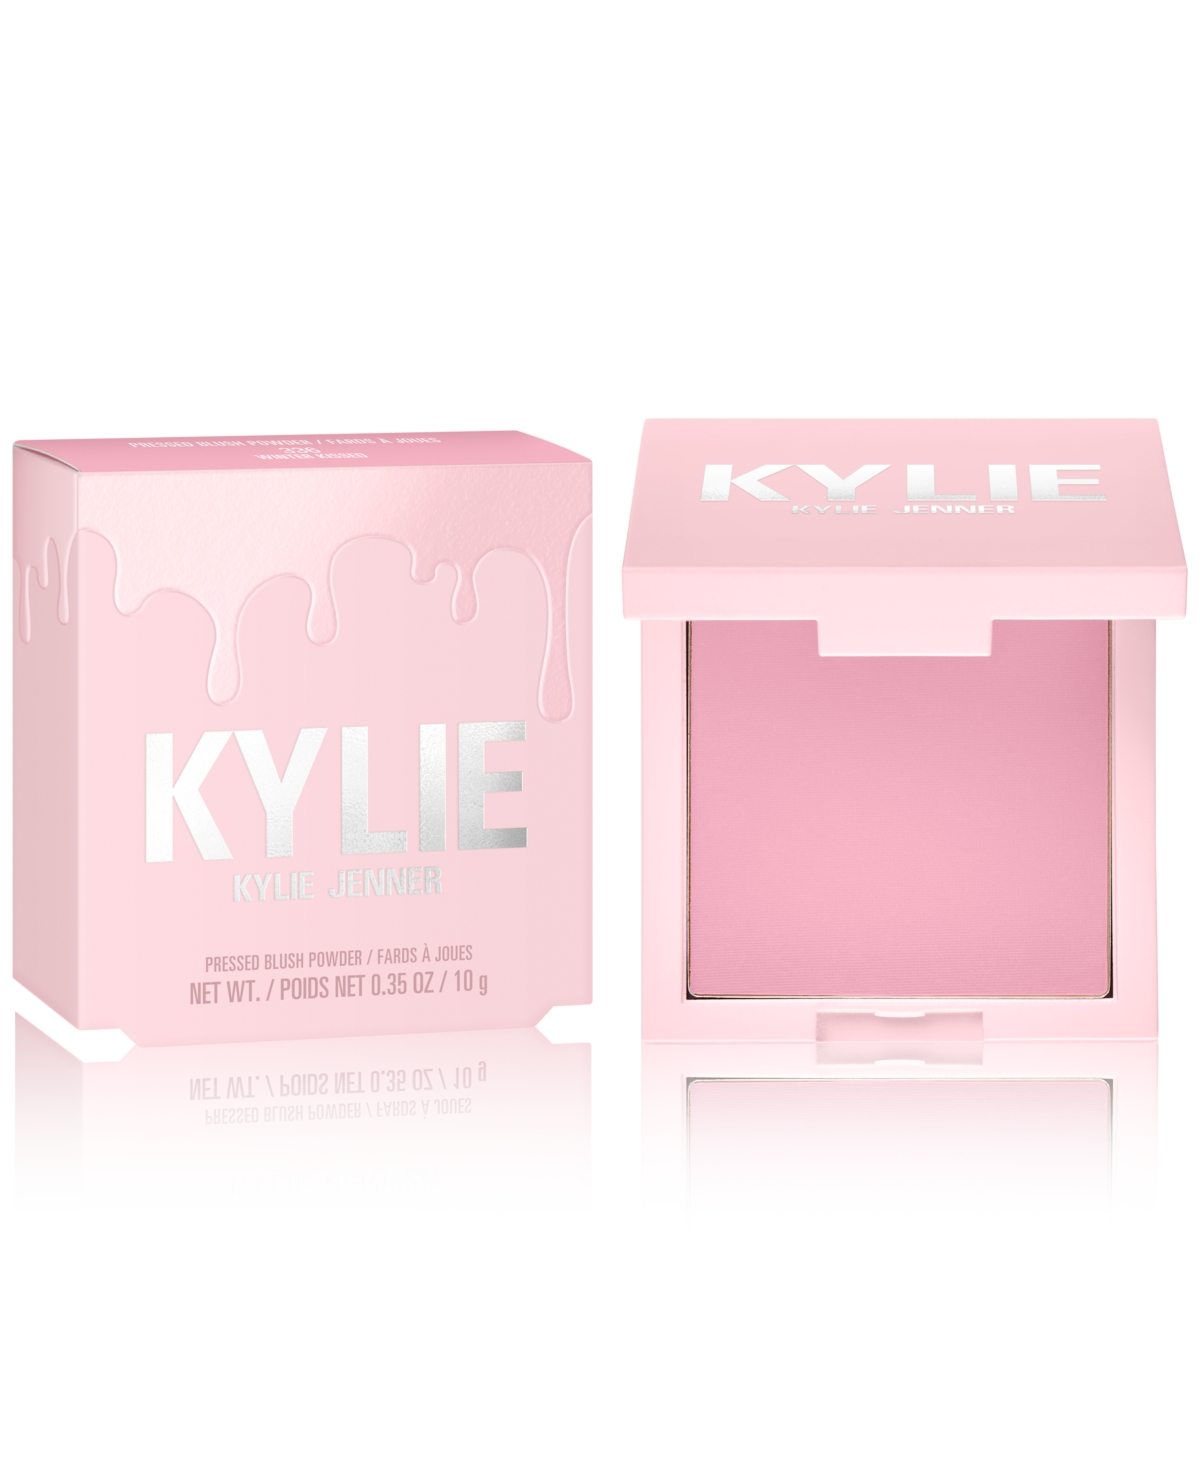 Kylie Cosmetics Pressed Blush Powder In Winter Kissed